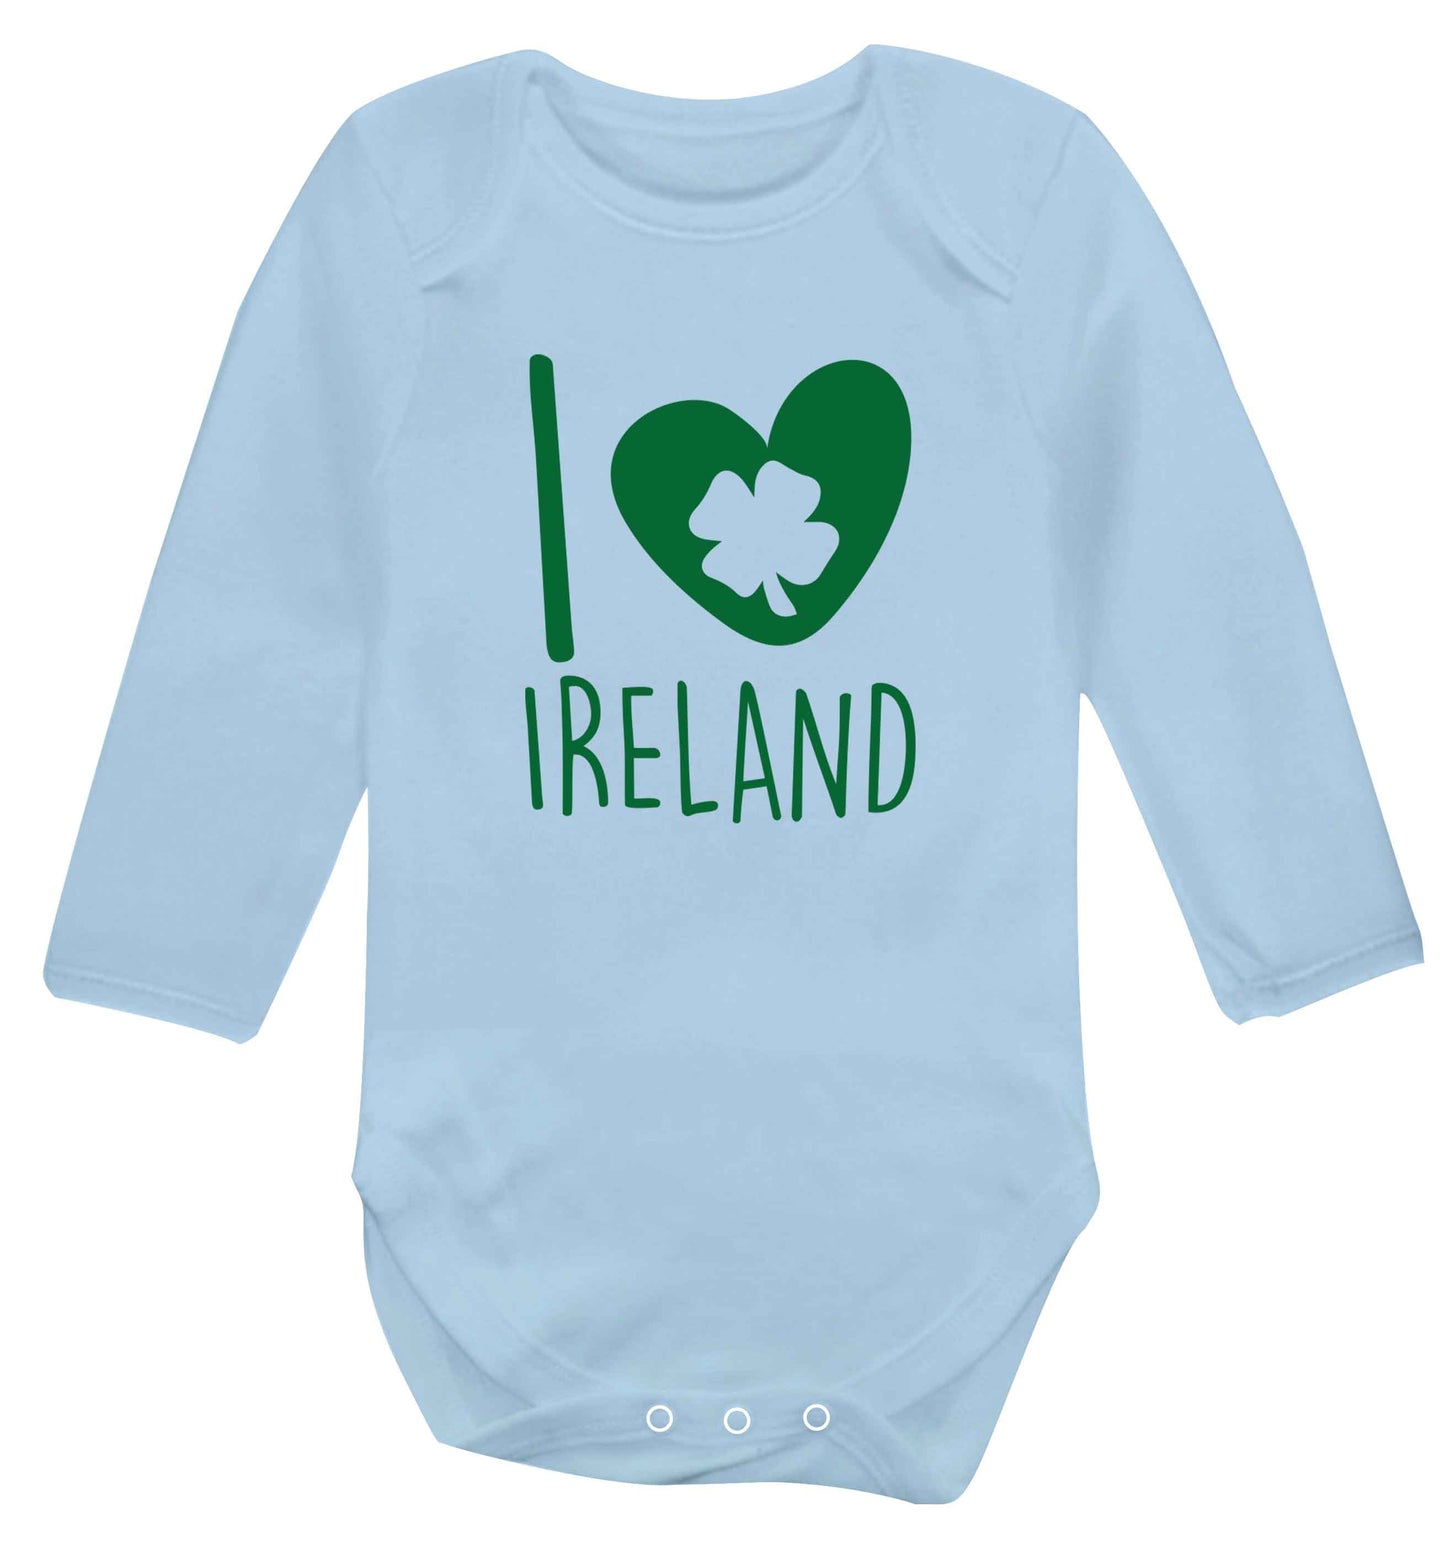 I love Ireland baby vest long sleeved pale blue 6-12 months